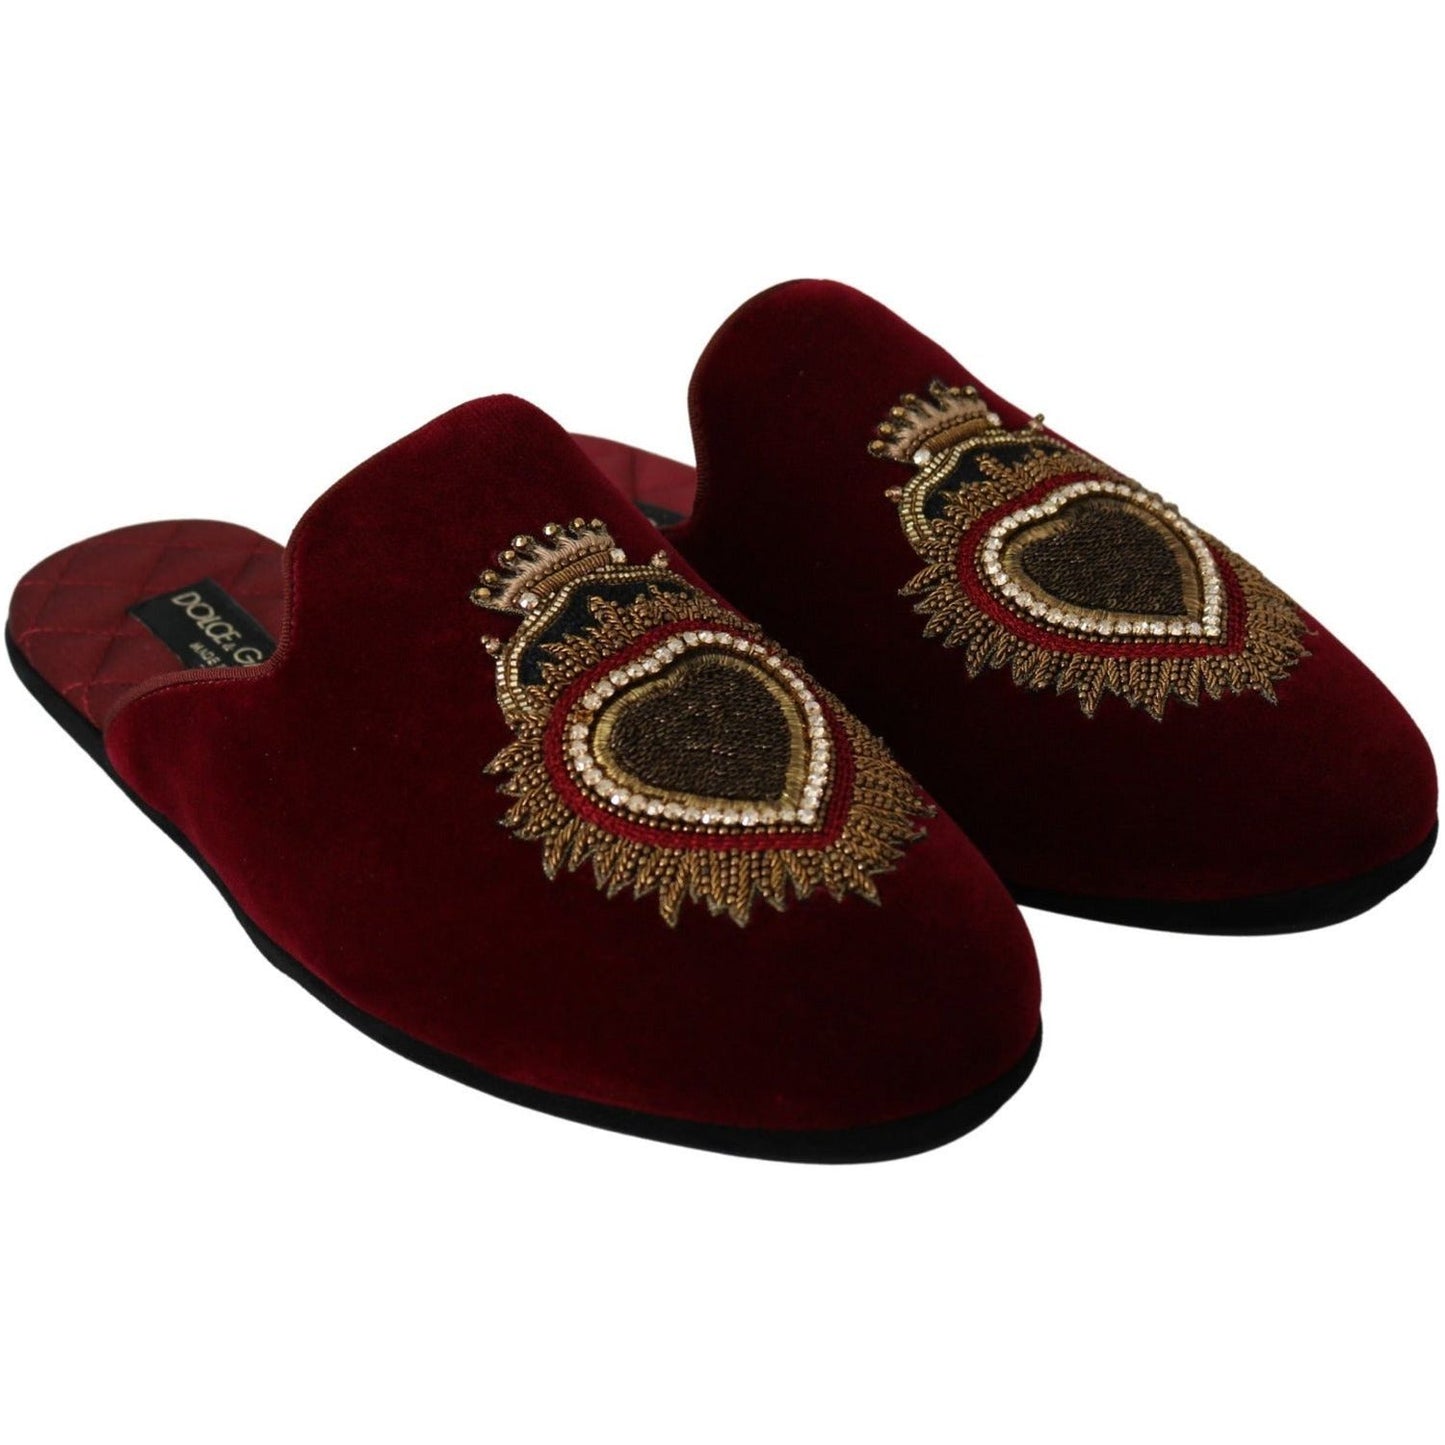 Dolce & Gabbana Red Velvet Embroidered Slides red-velvet-sacred-heart-embroidery-slides-shoes IMG_0093-1-scaled-8c5077c2-baf.jpg